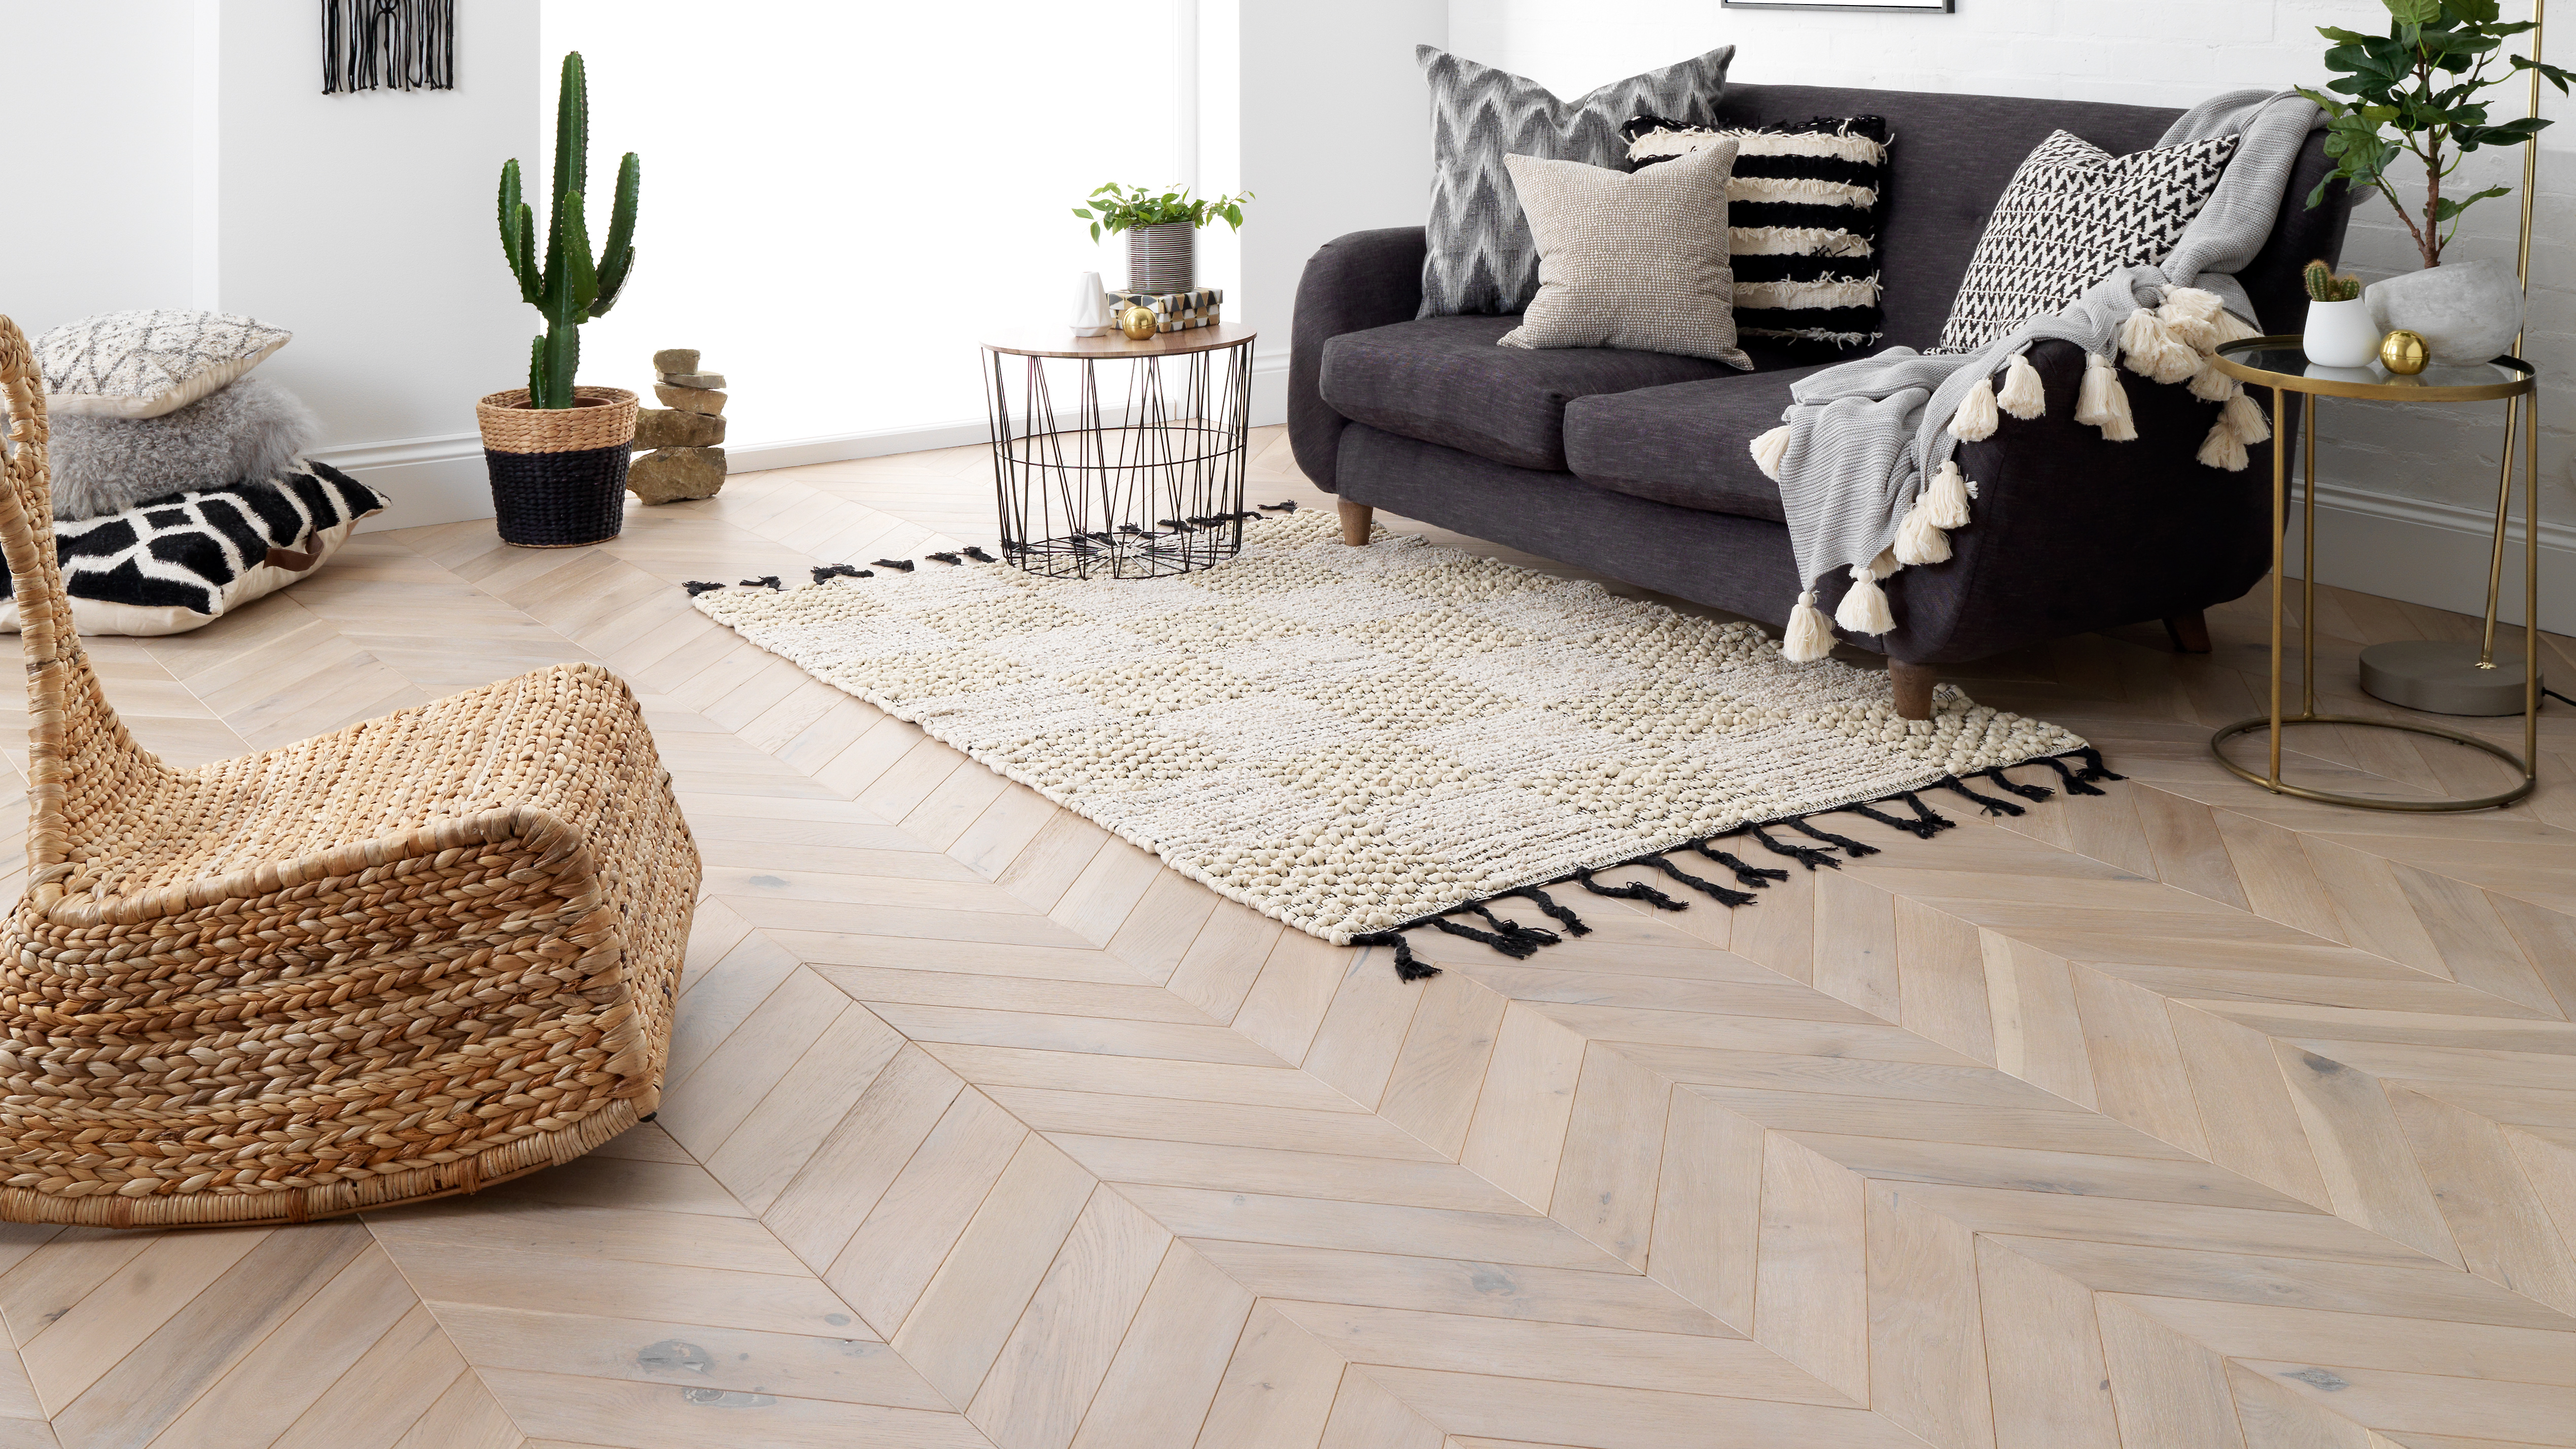 Wooden Flooring Hardwood, Is Wooden Floor More Expensive Than Carpet